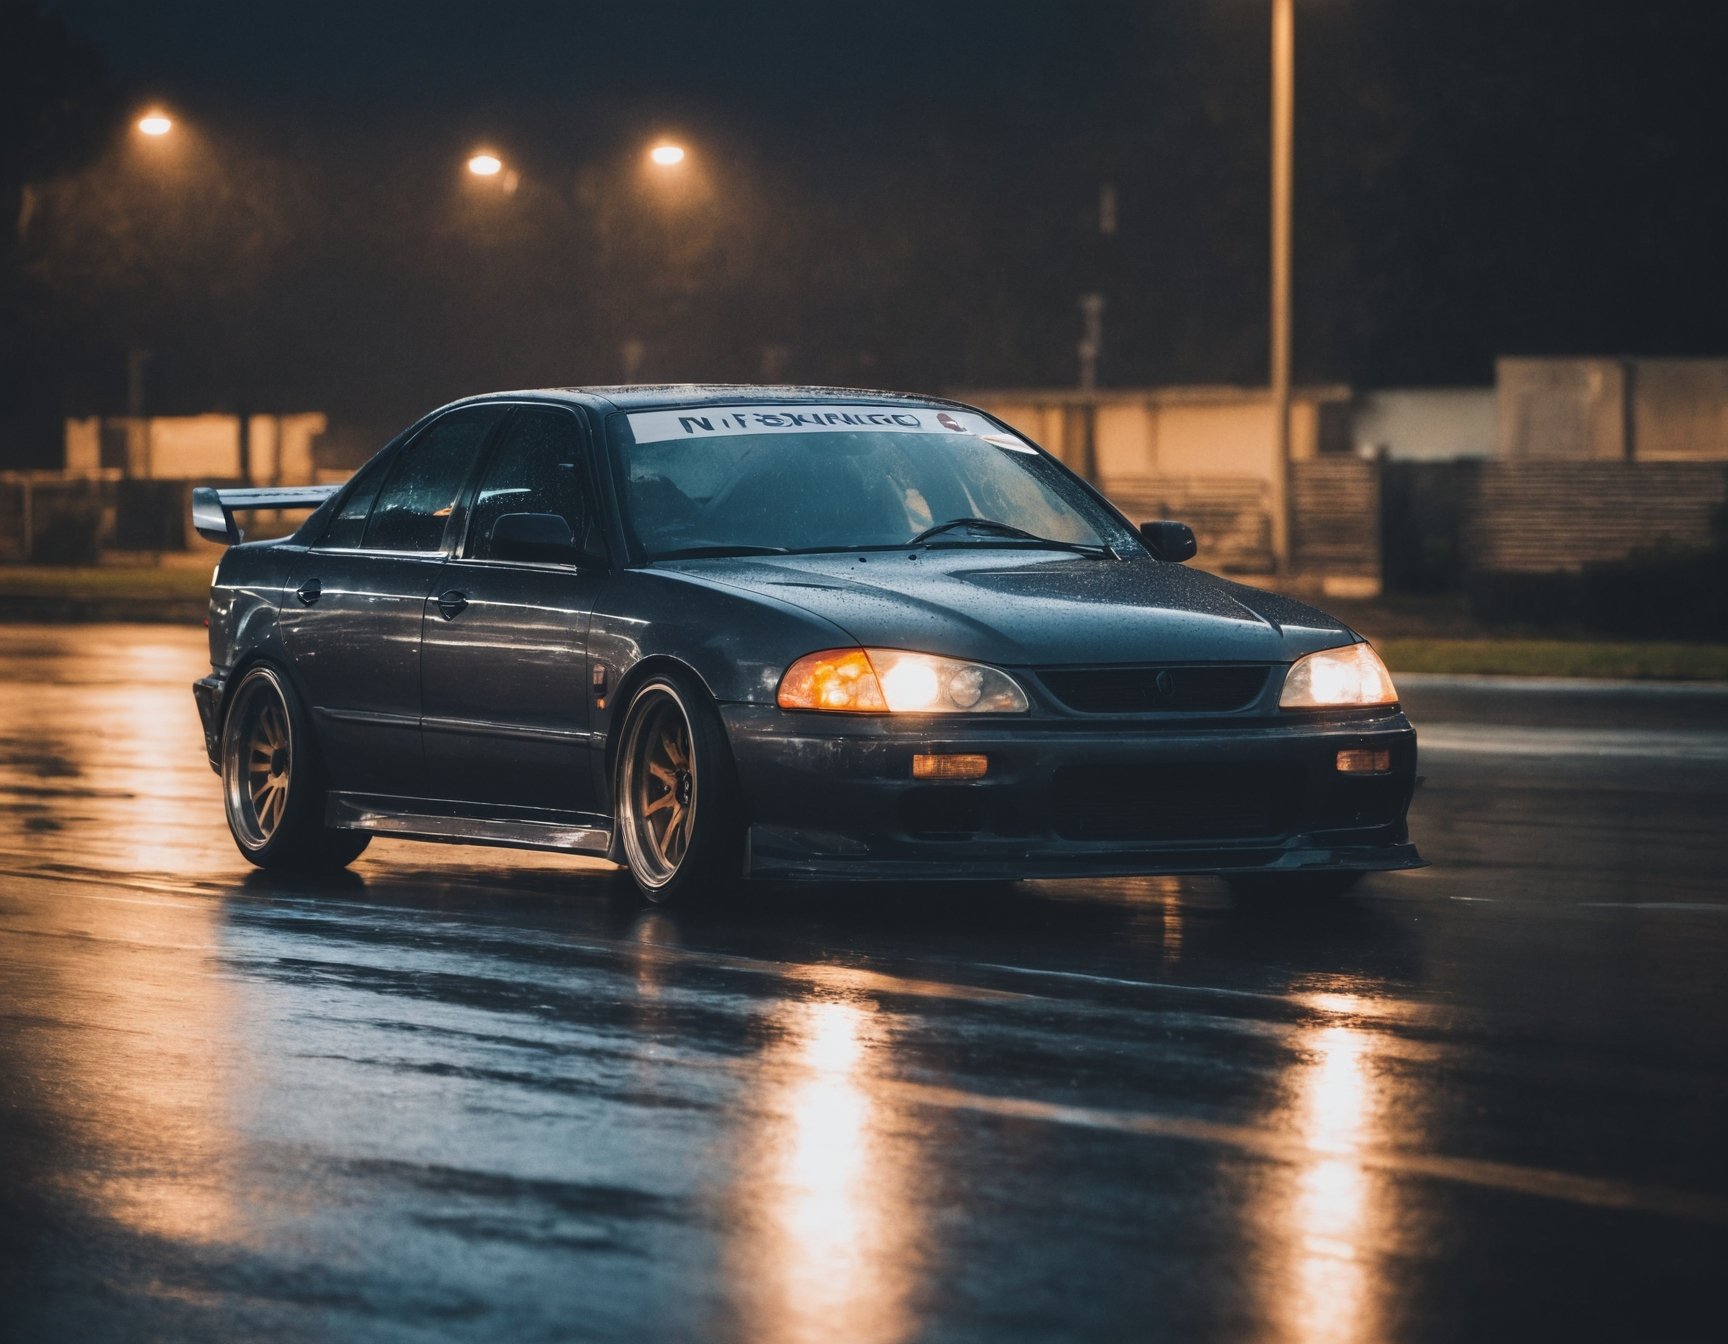 photo of tuned car, night, rainy weather, motion blur